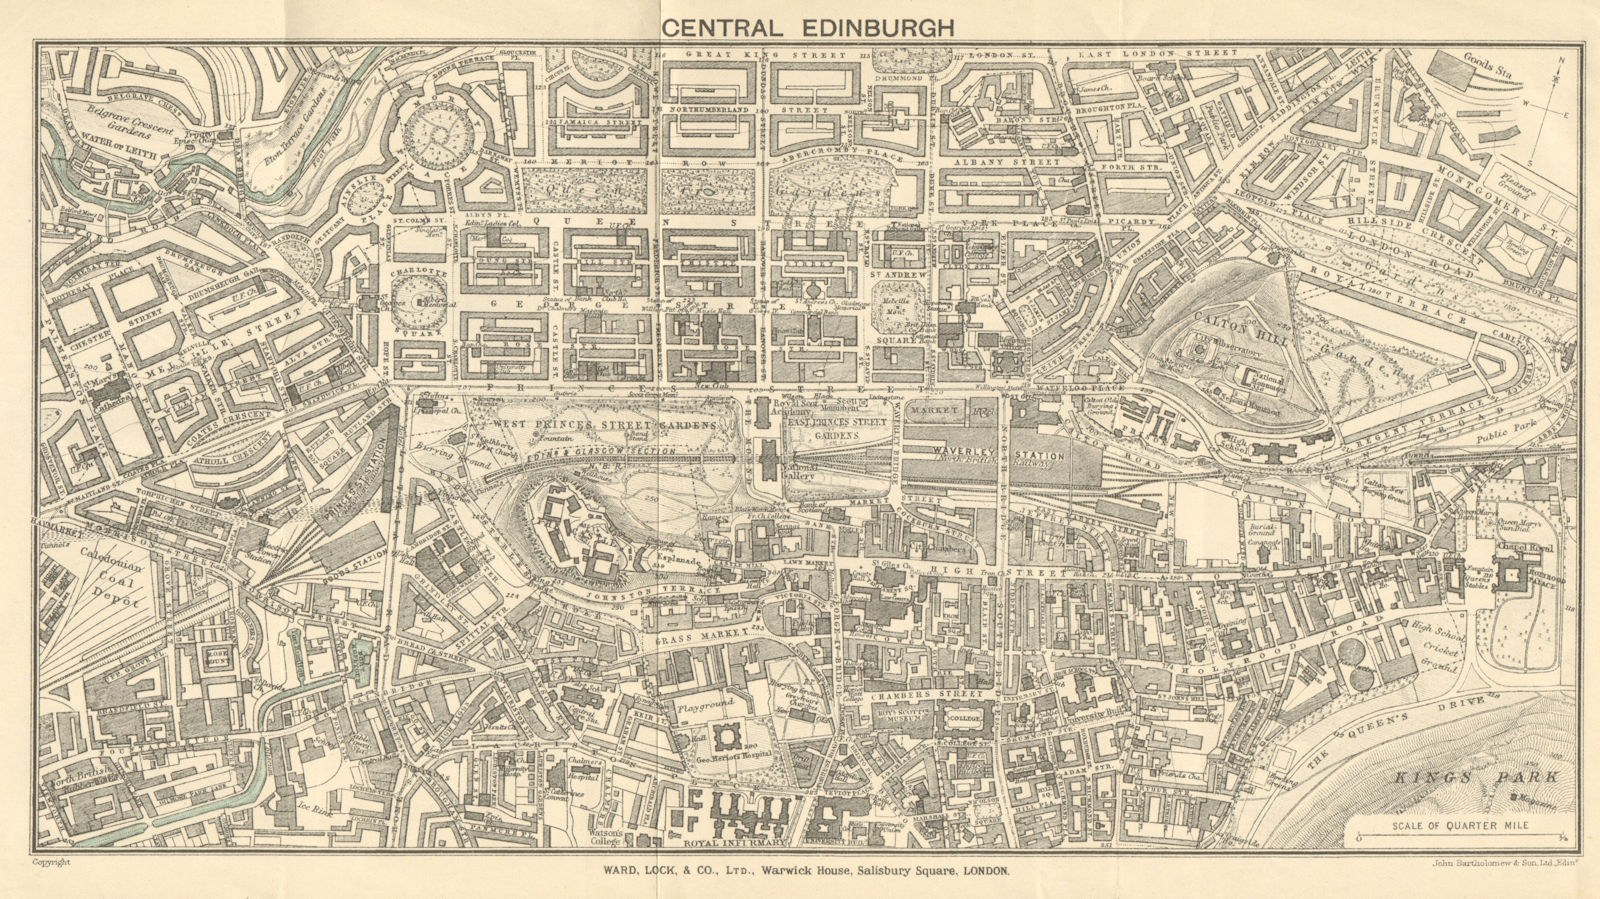 CENTRAL EDINBURGH vintage town/city plan. Scotland. WARD LOCK 1922 old map